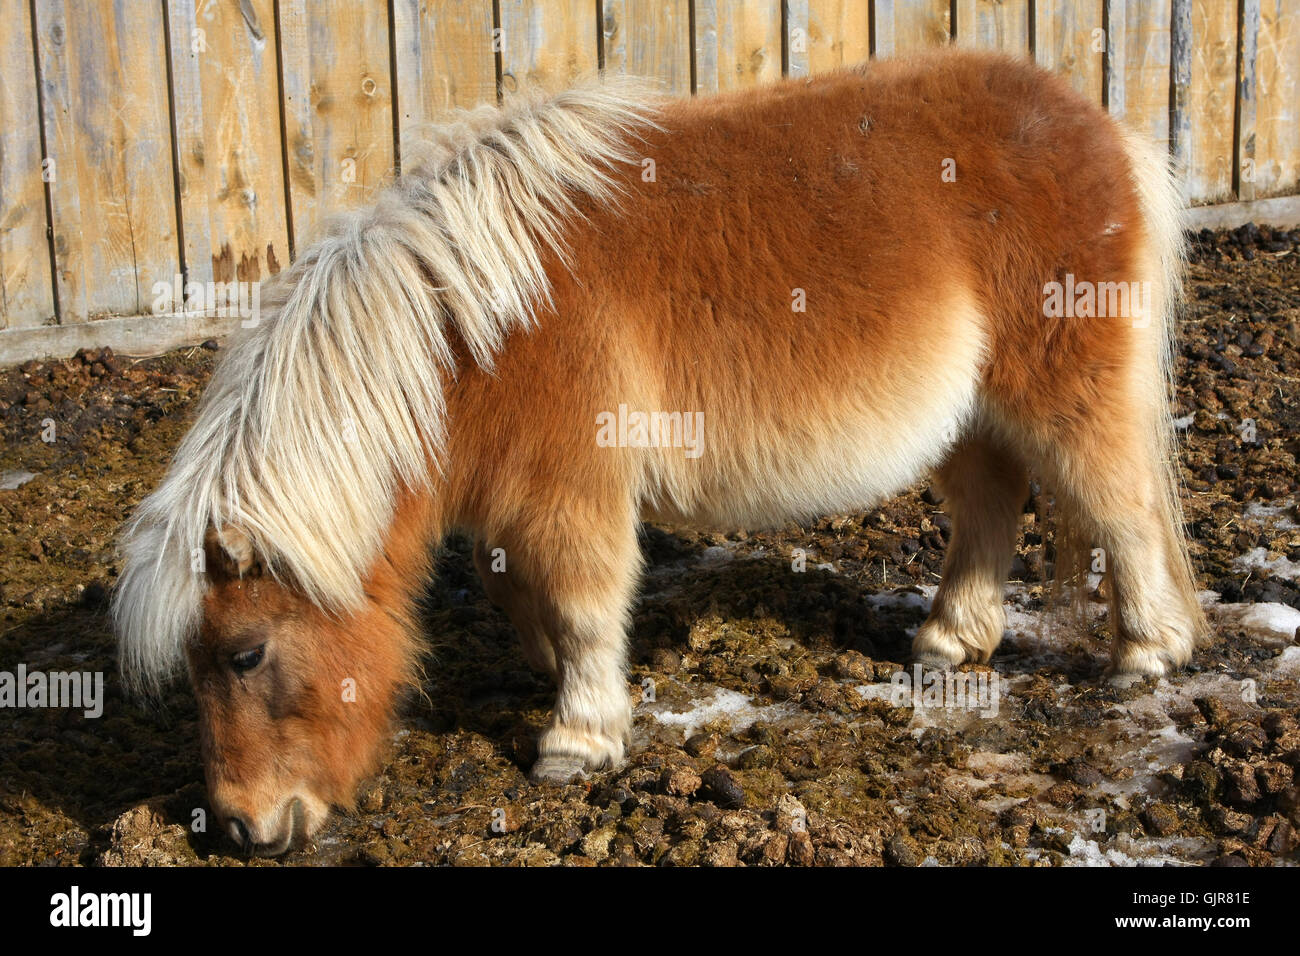 Miniature horse Stock Photo